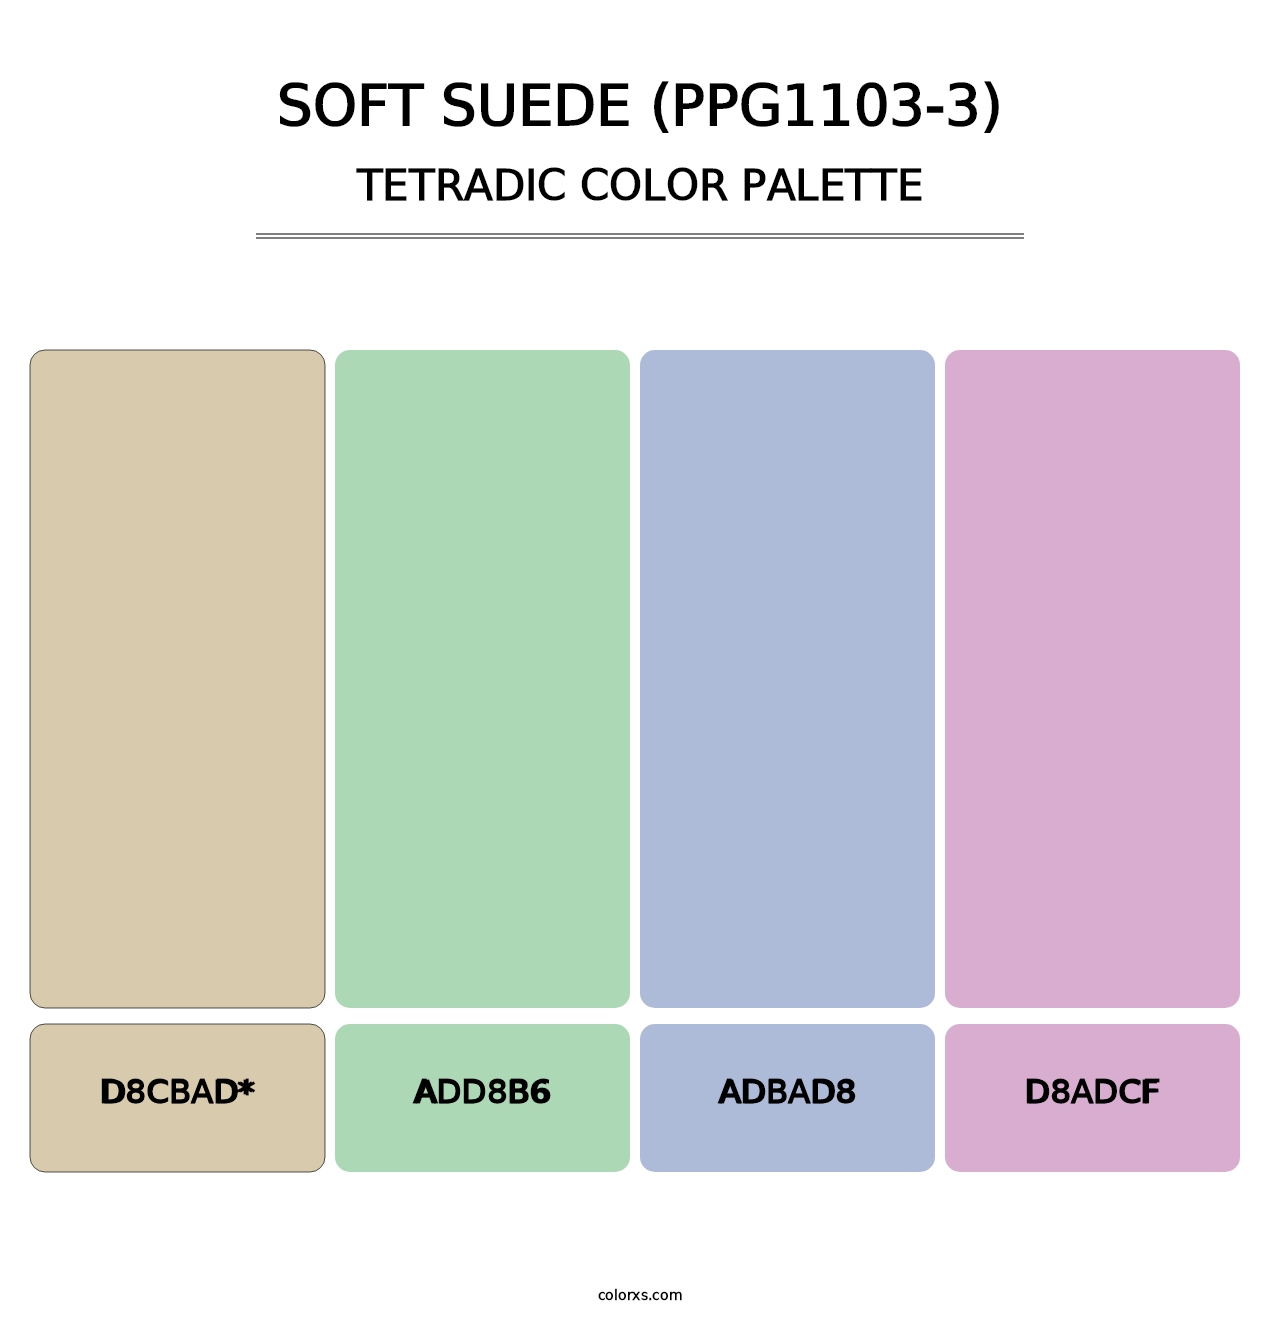 Soft Suede (PPG1103-3) - Tetradic Color Palette